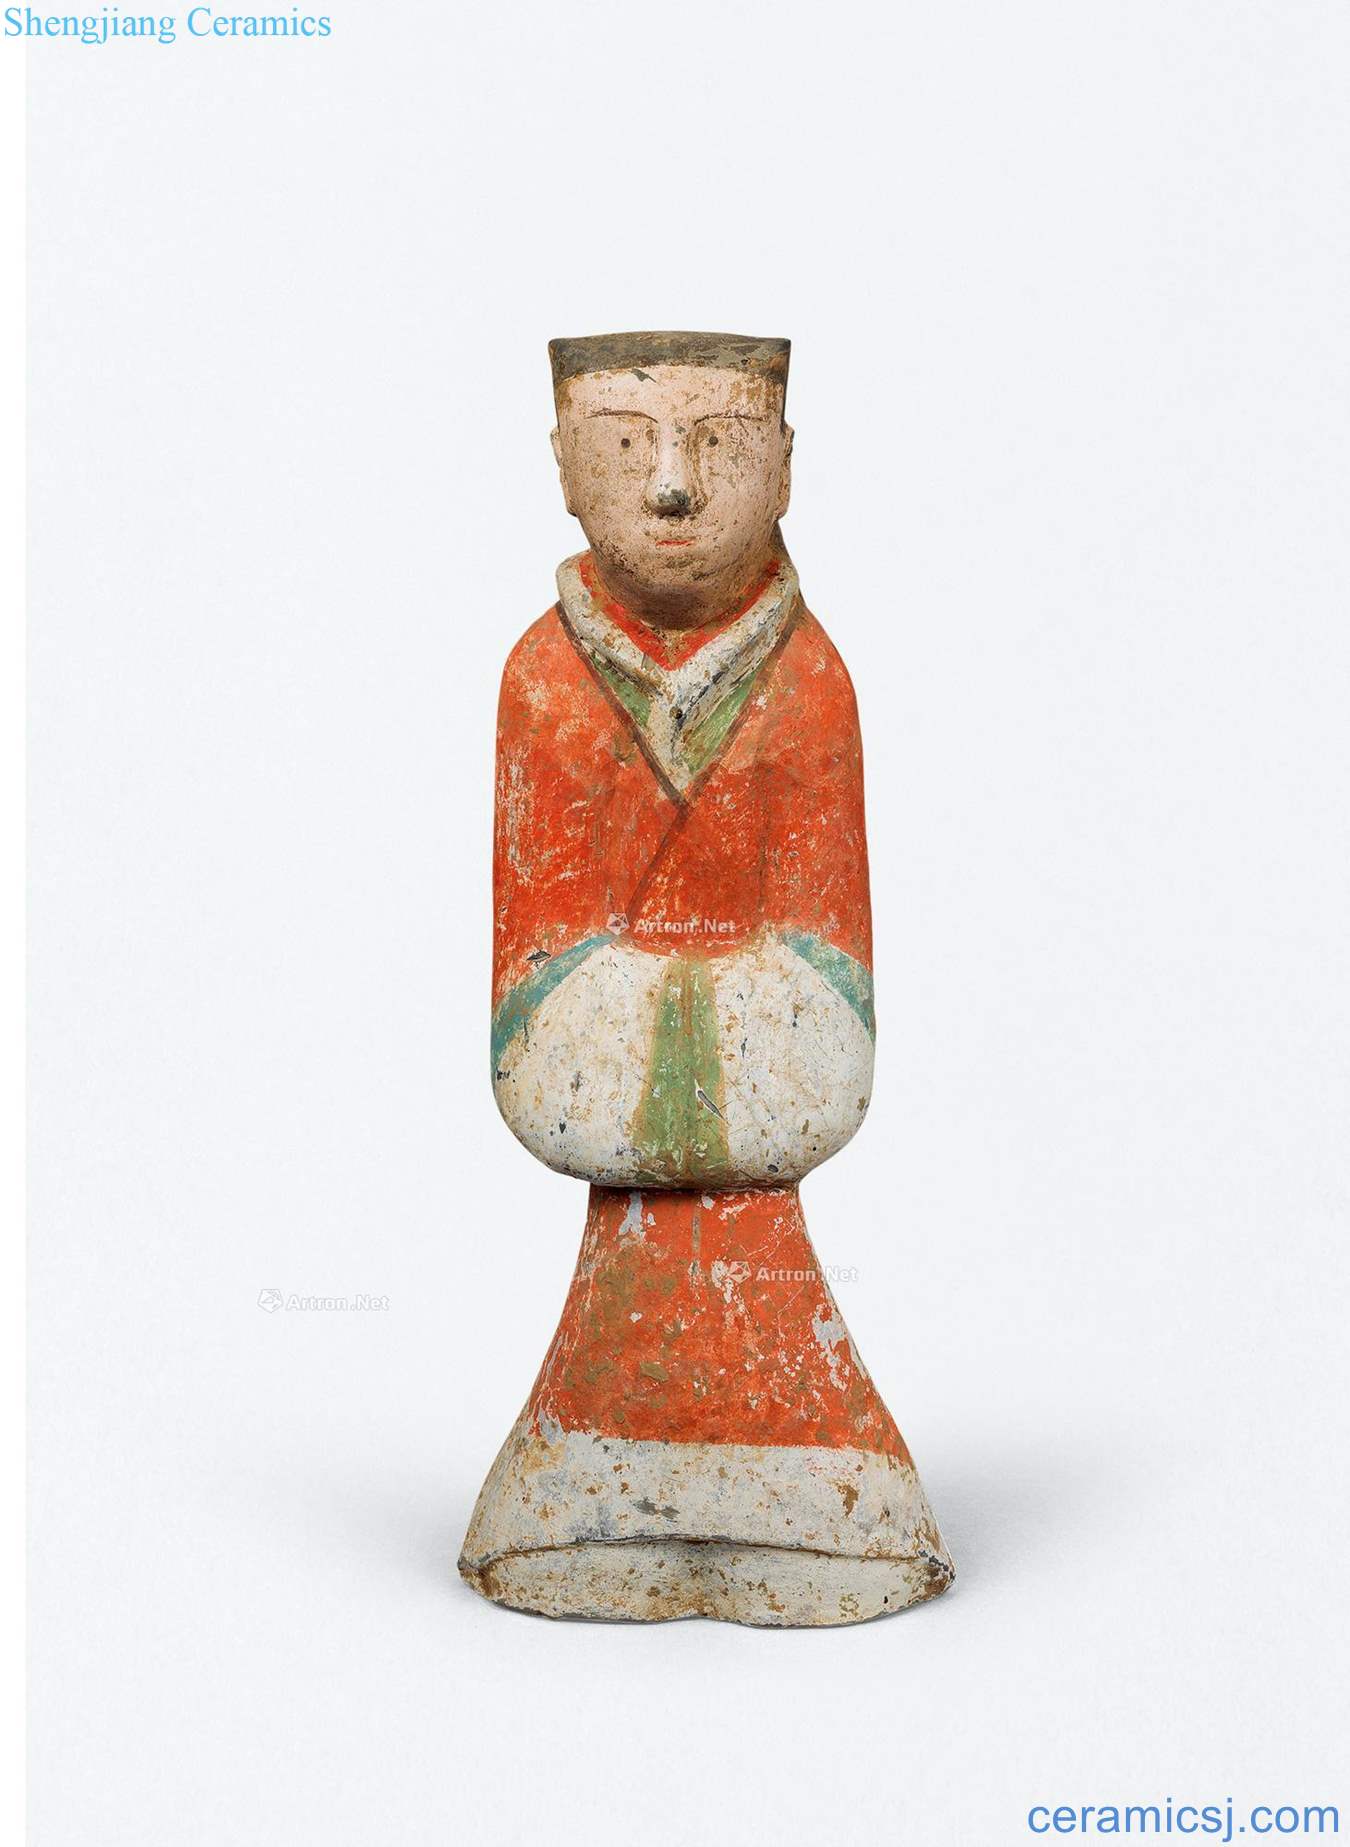 Han dynasty painted figurines